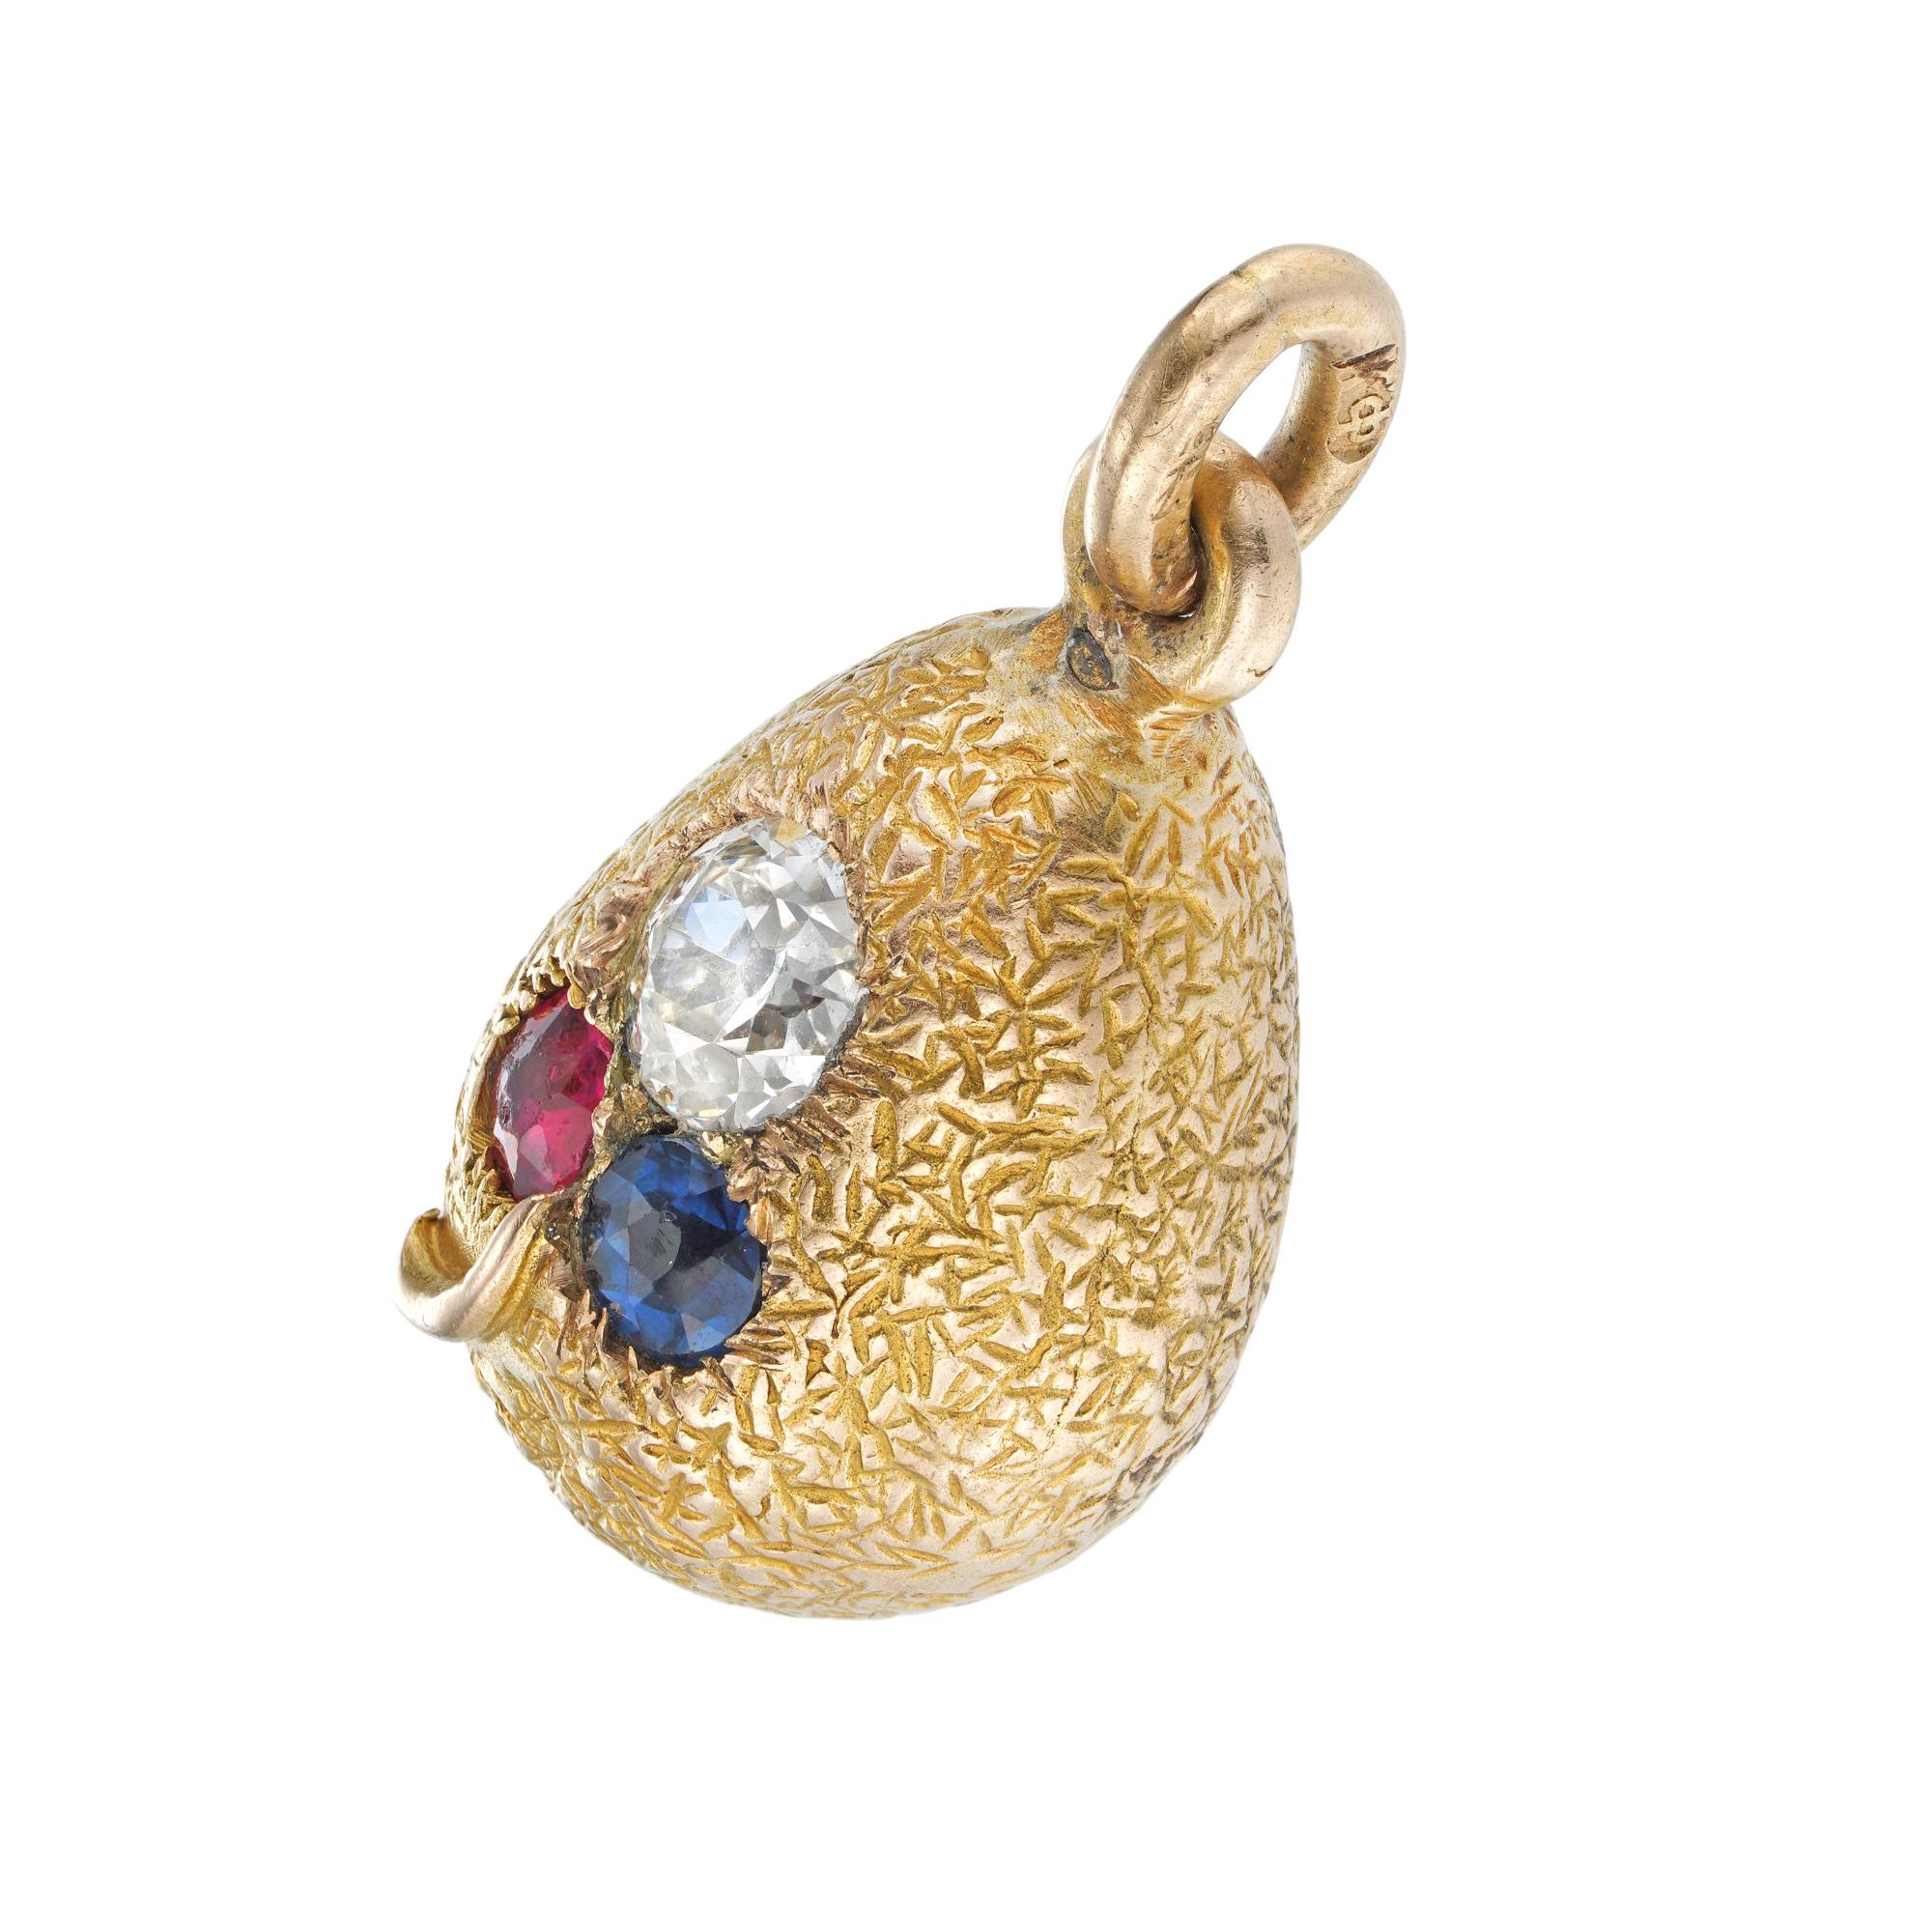 Russian Empire A Fabergé jewelled egg pendant